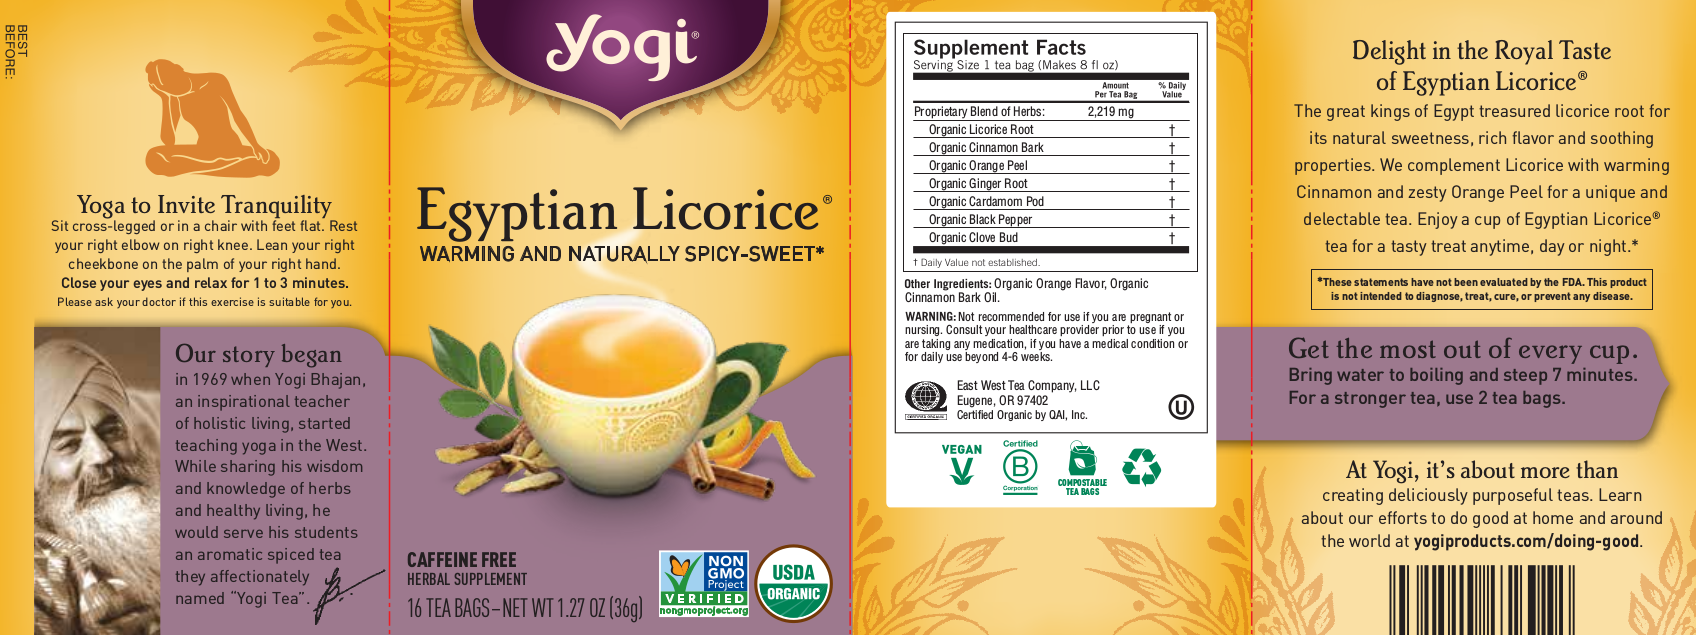 Yogi Teas Egyptian Licorice Organic 16 bags